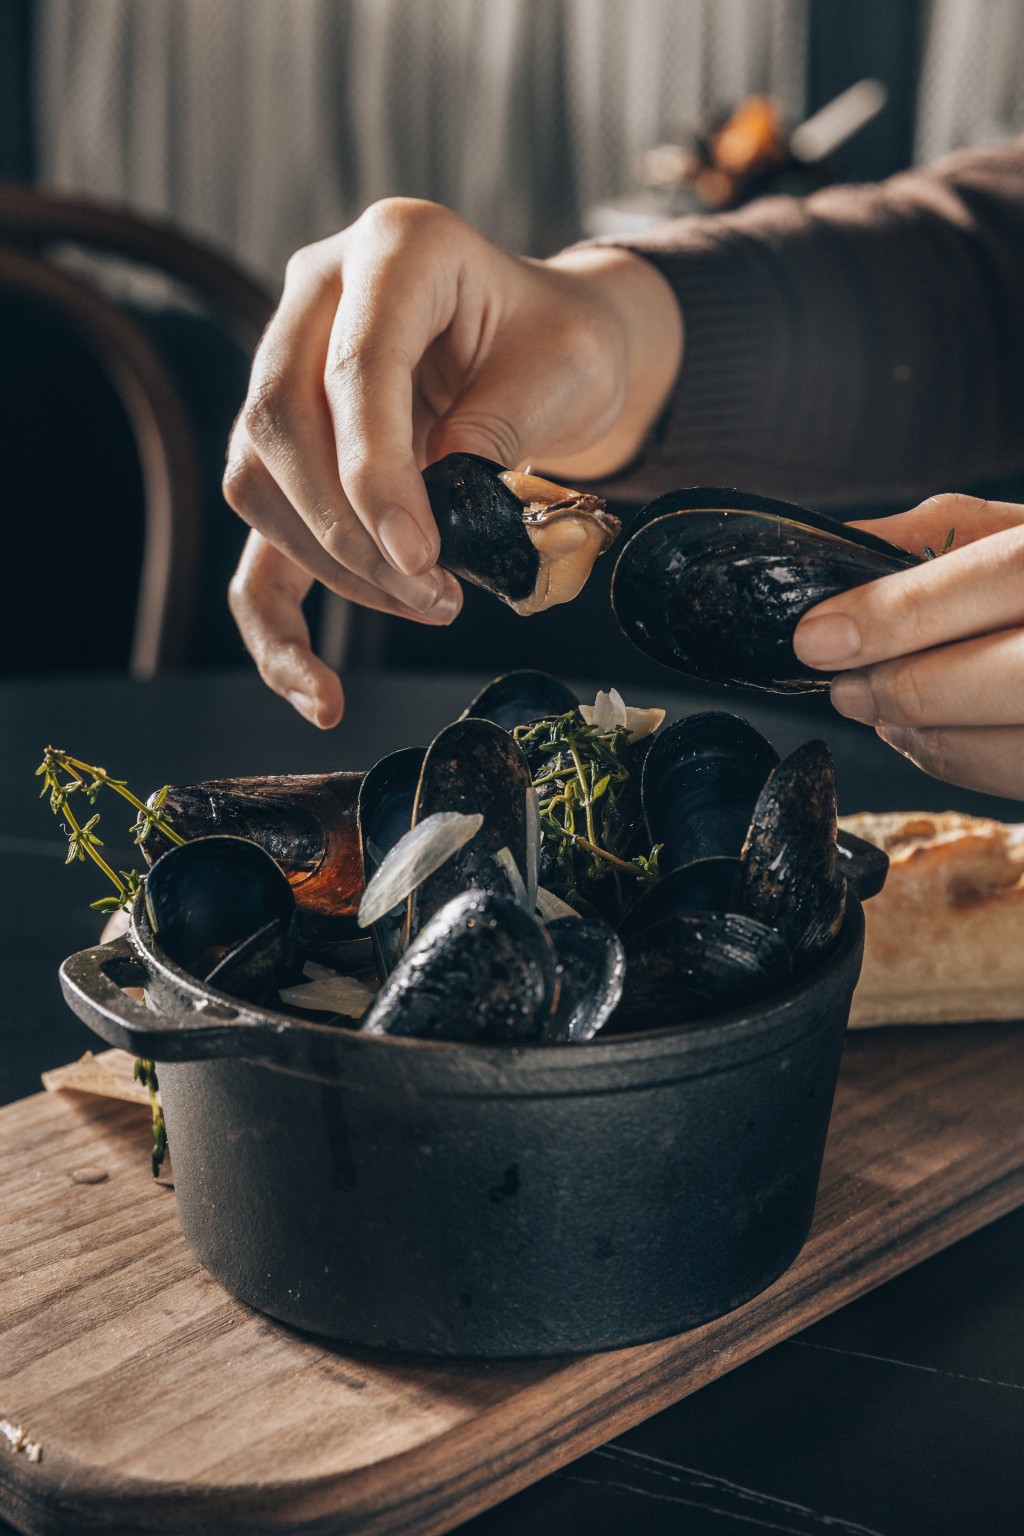 The Mussels所選用的法國「睡」青口，又名「活青口」，捕撈後放在低溫海水中令青口進入睡眠狀態，再以冷凍方法新鮮空運。